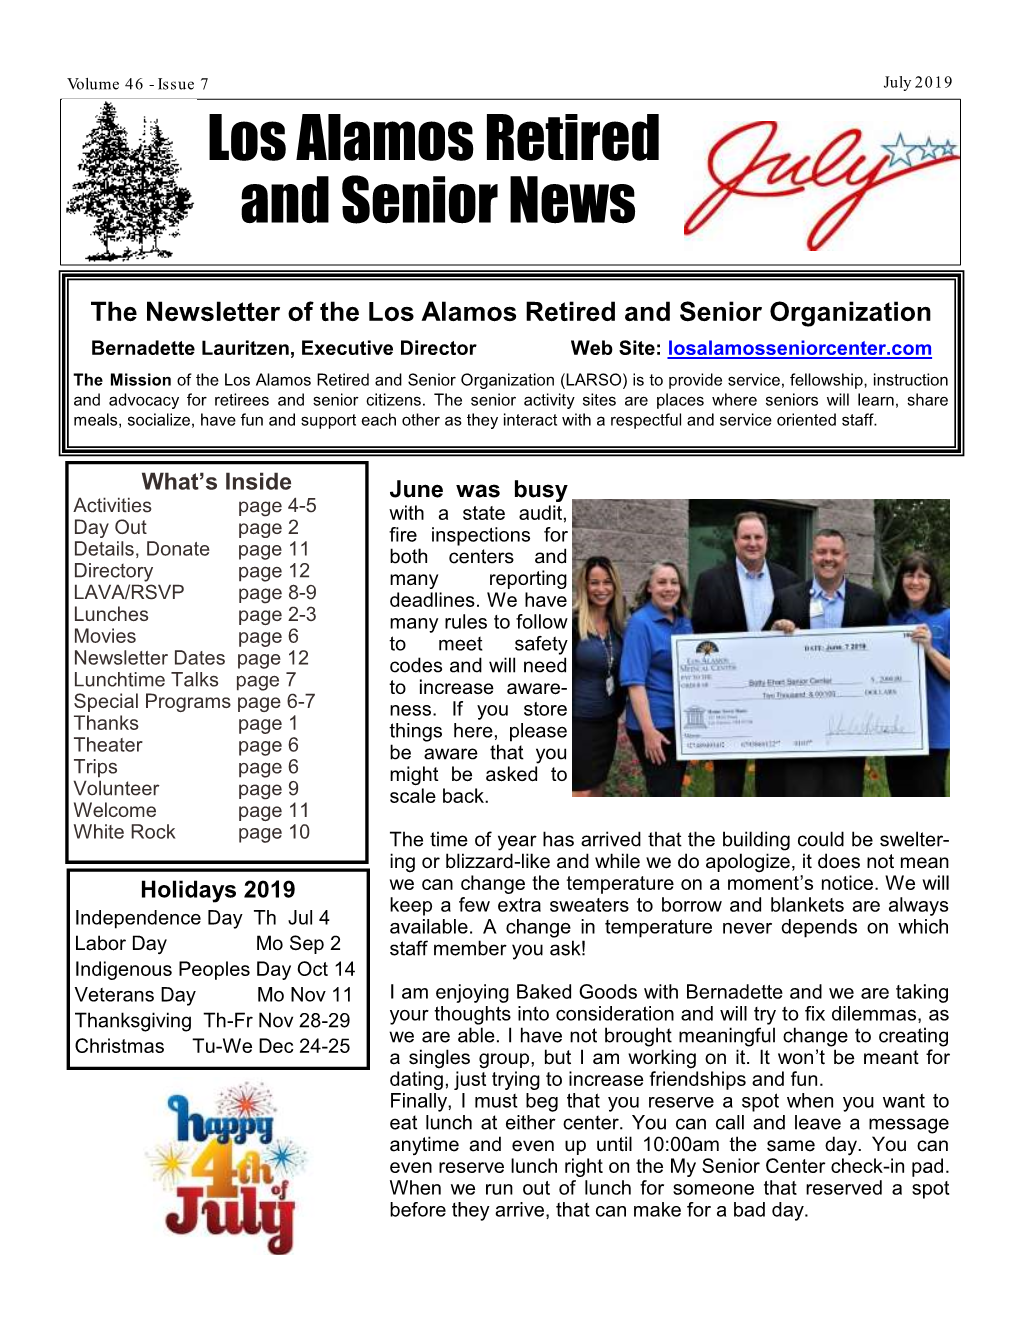 Los Alamos Retired and Senior News